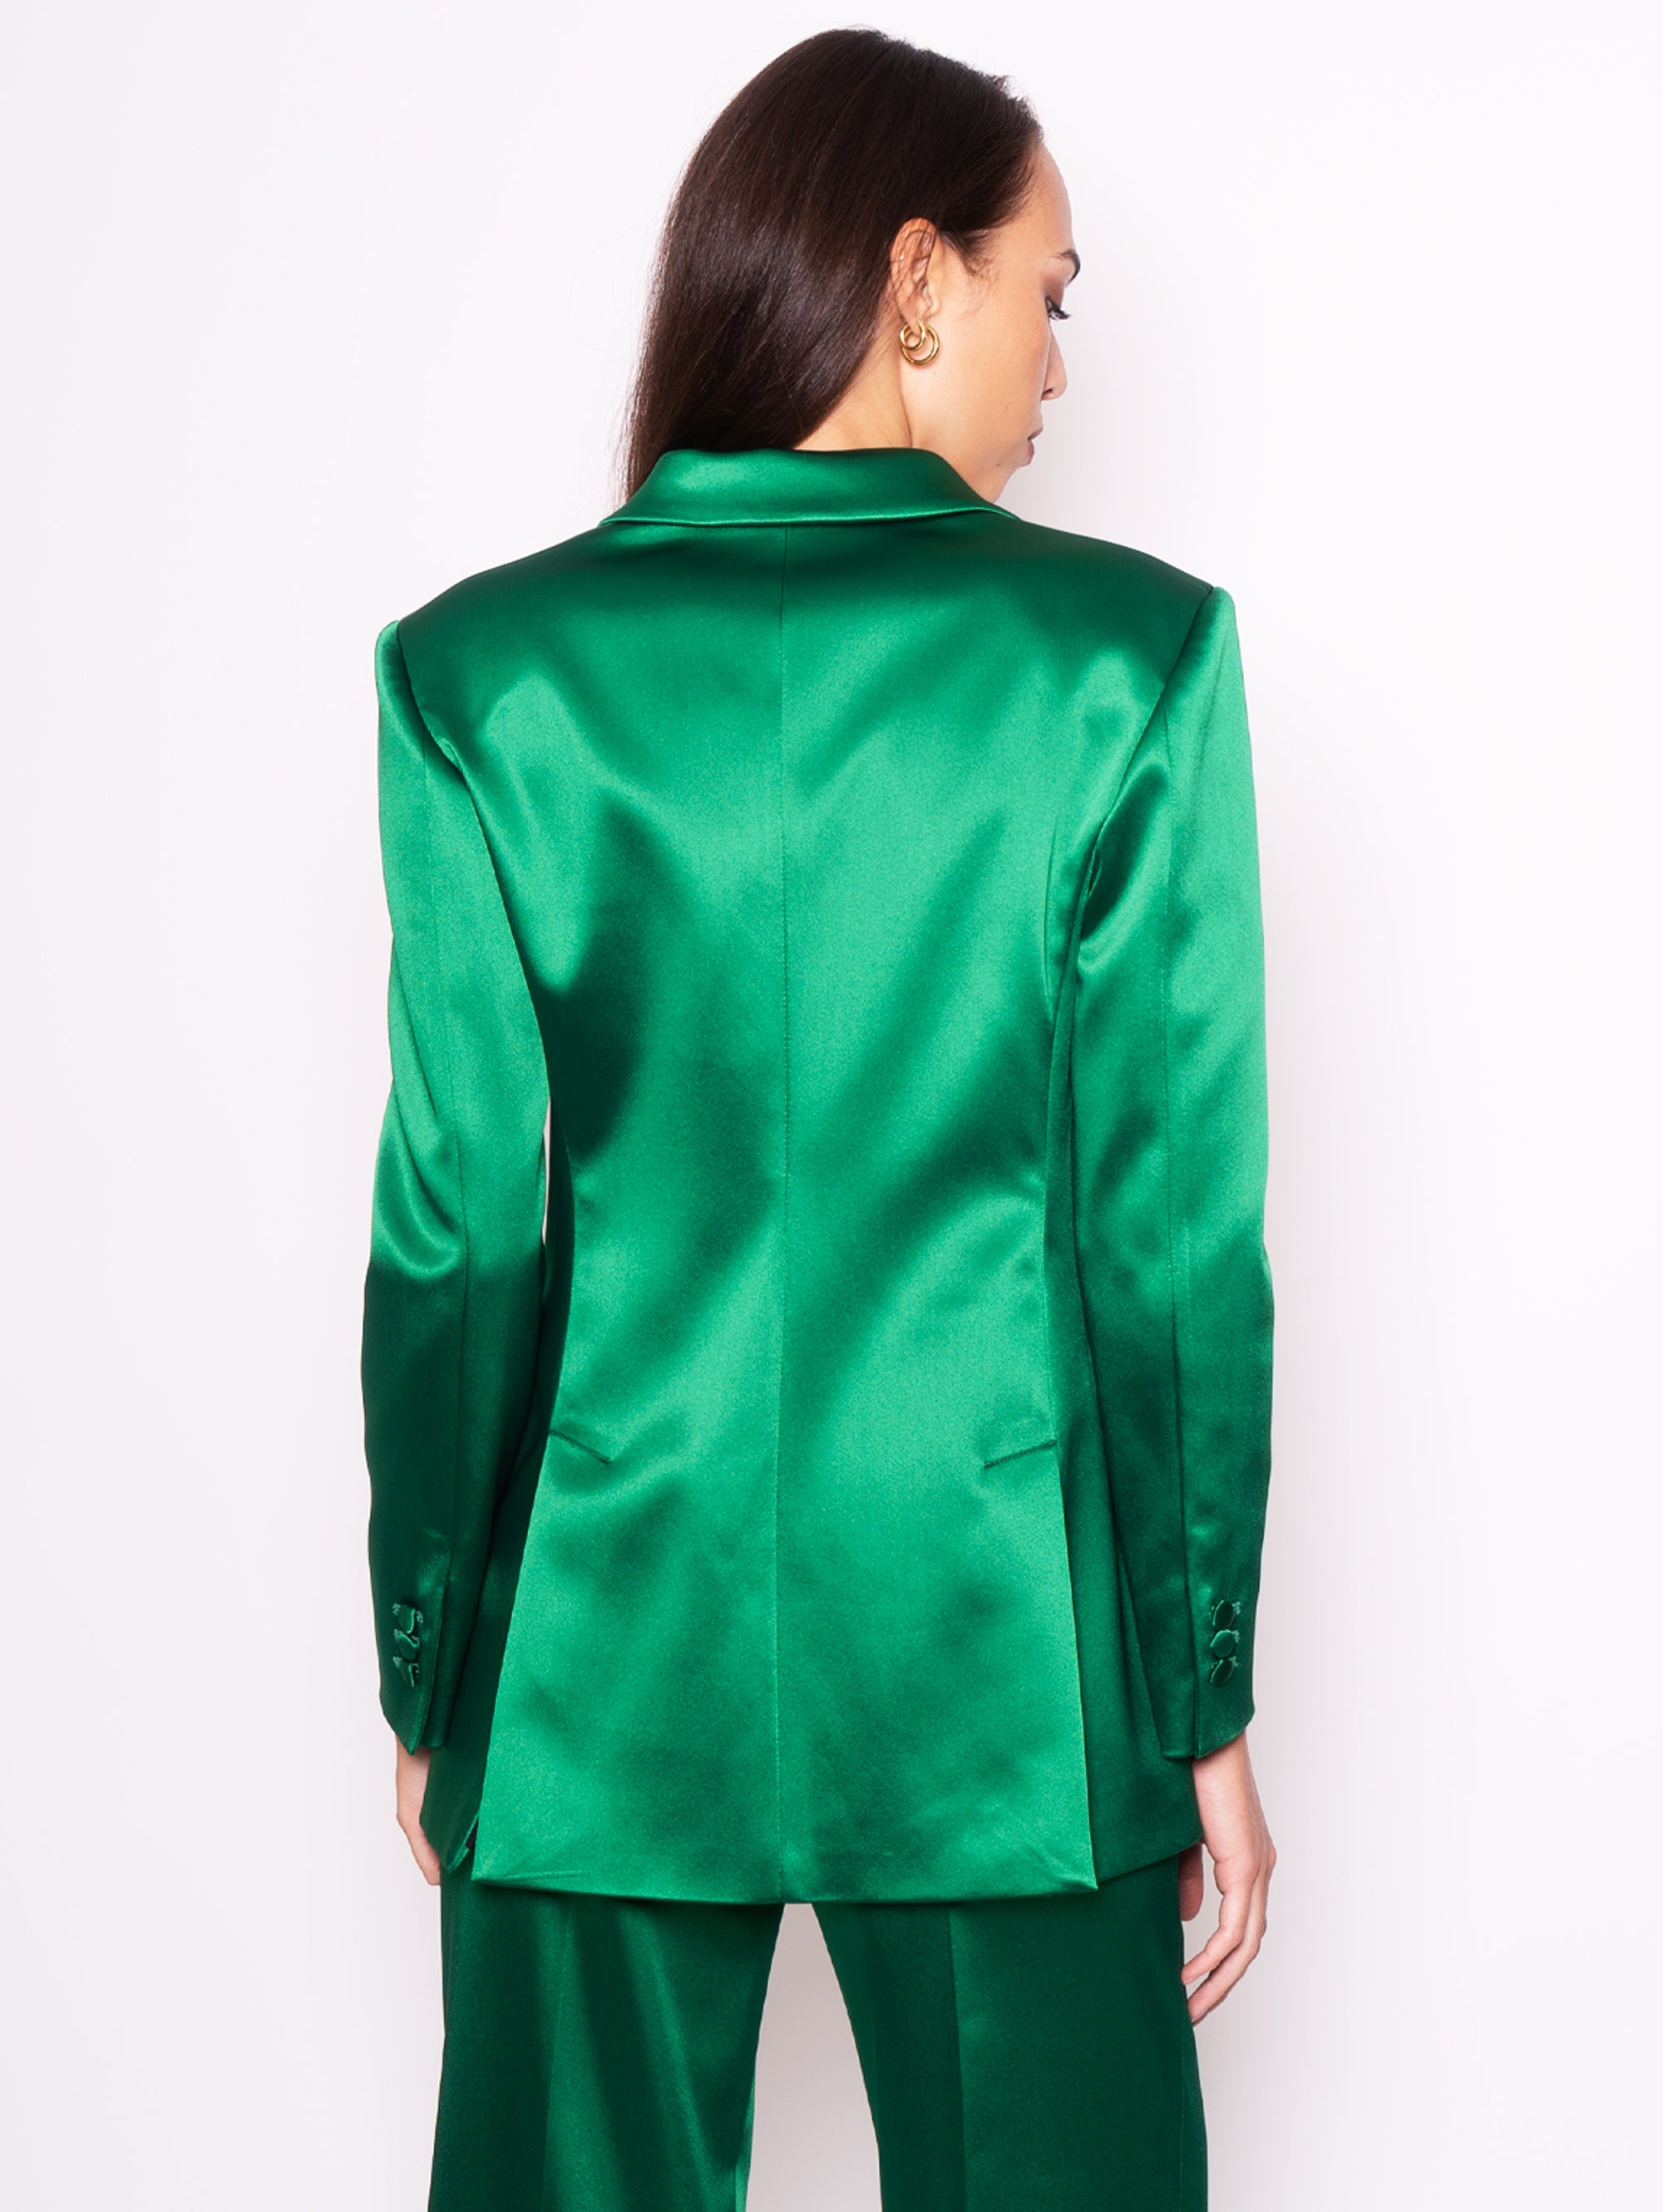 Zweireihige Jacke aus grünem Satin